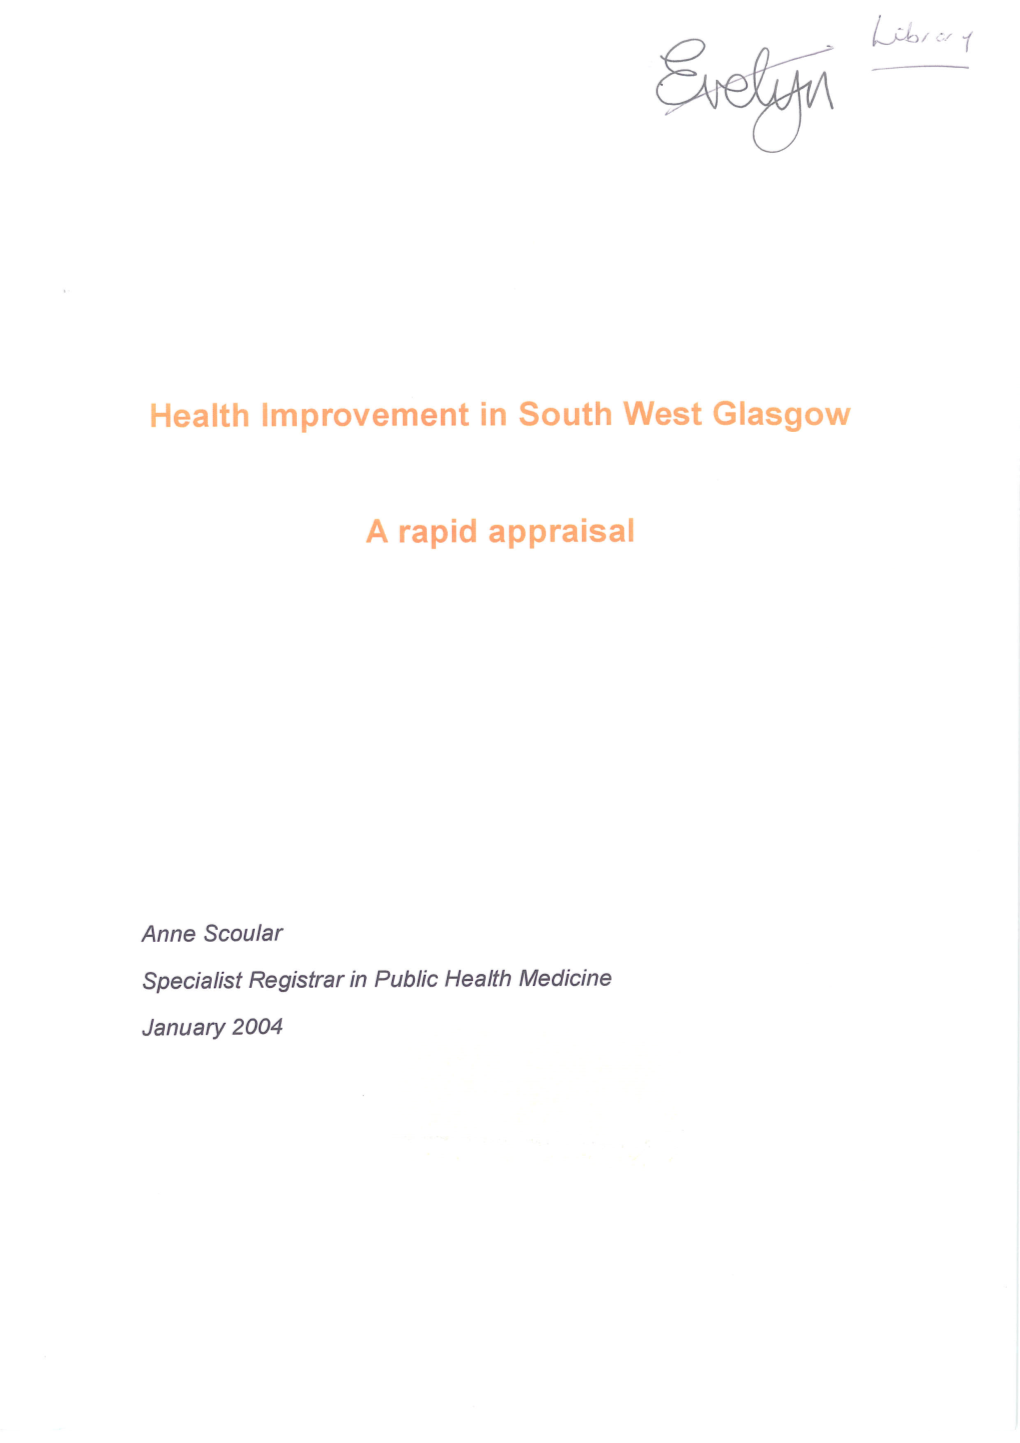 Health Improvement in South West Glasgow a Rapid Appraisal